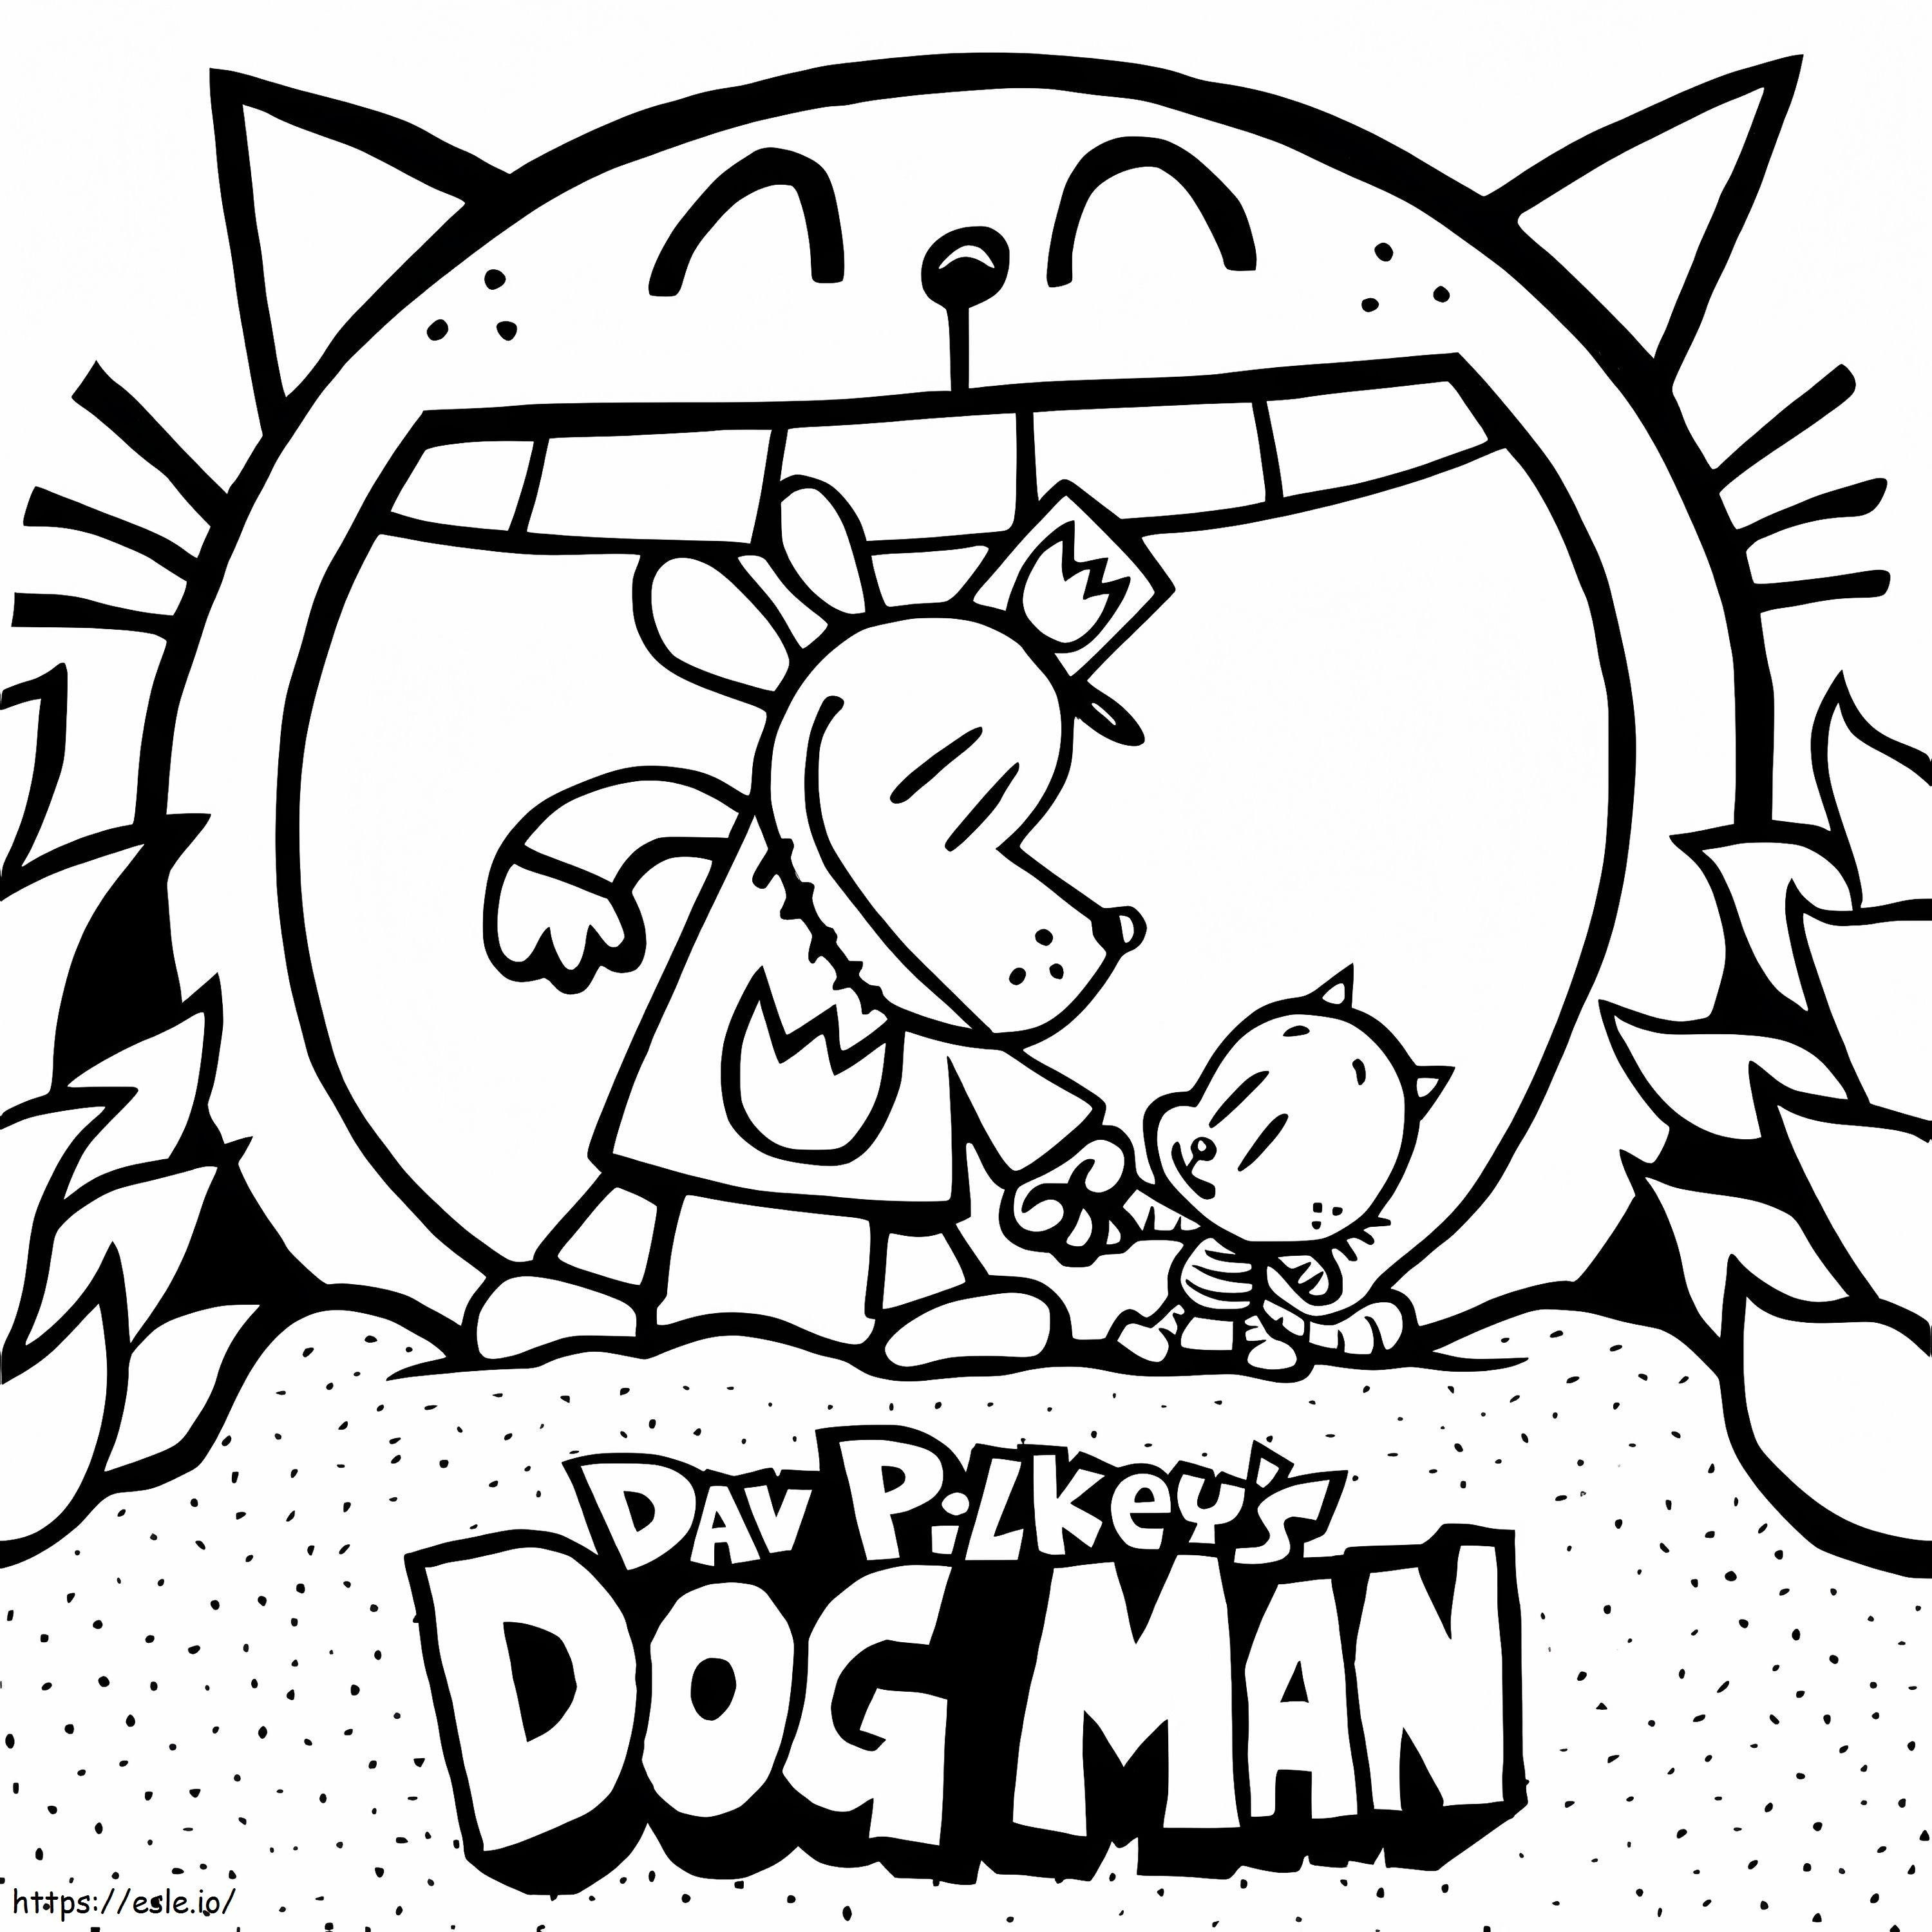 Dog man coloring page